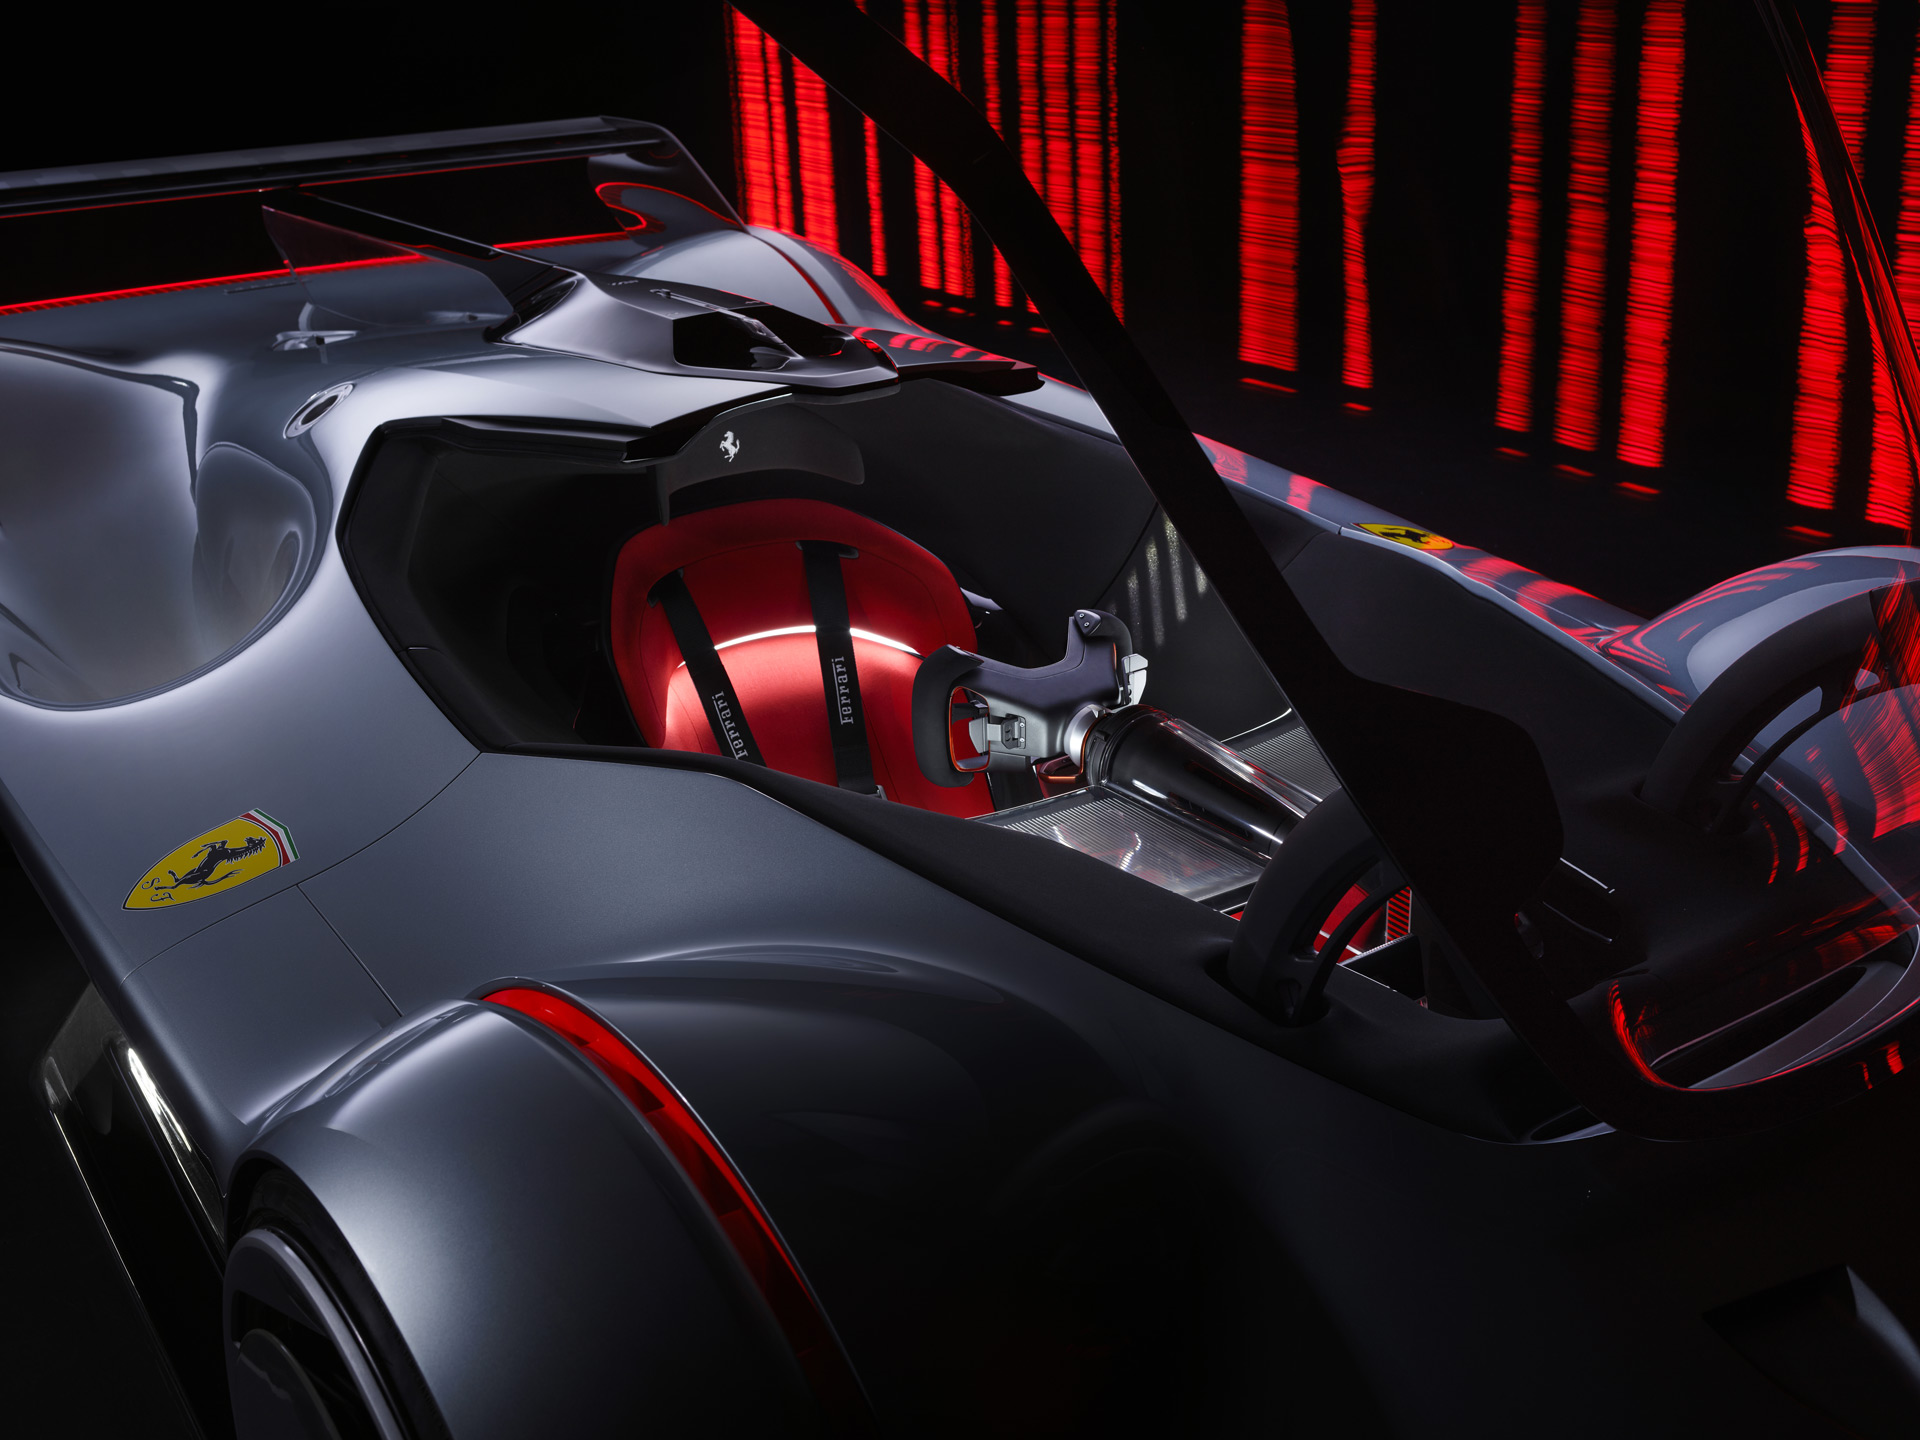 Ferrari Vision Gran Turismo concept